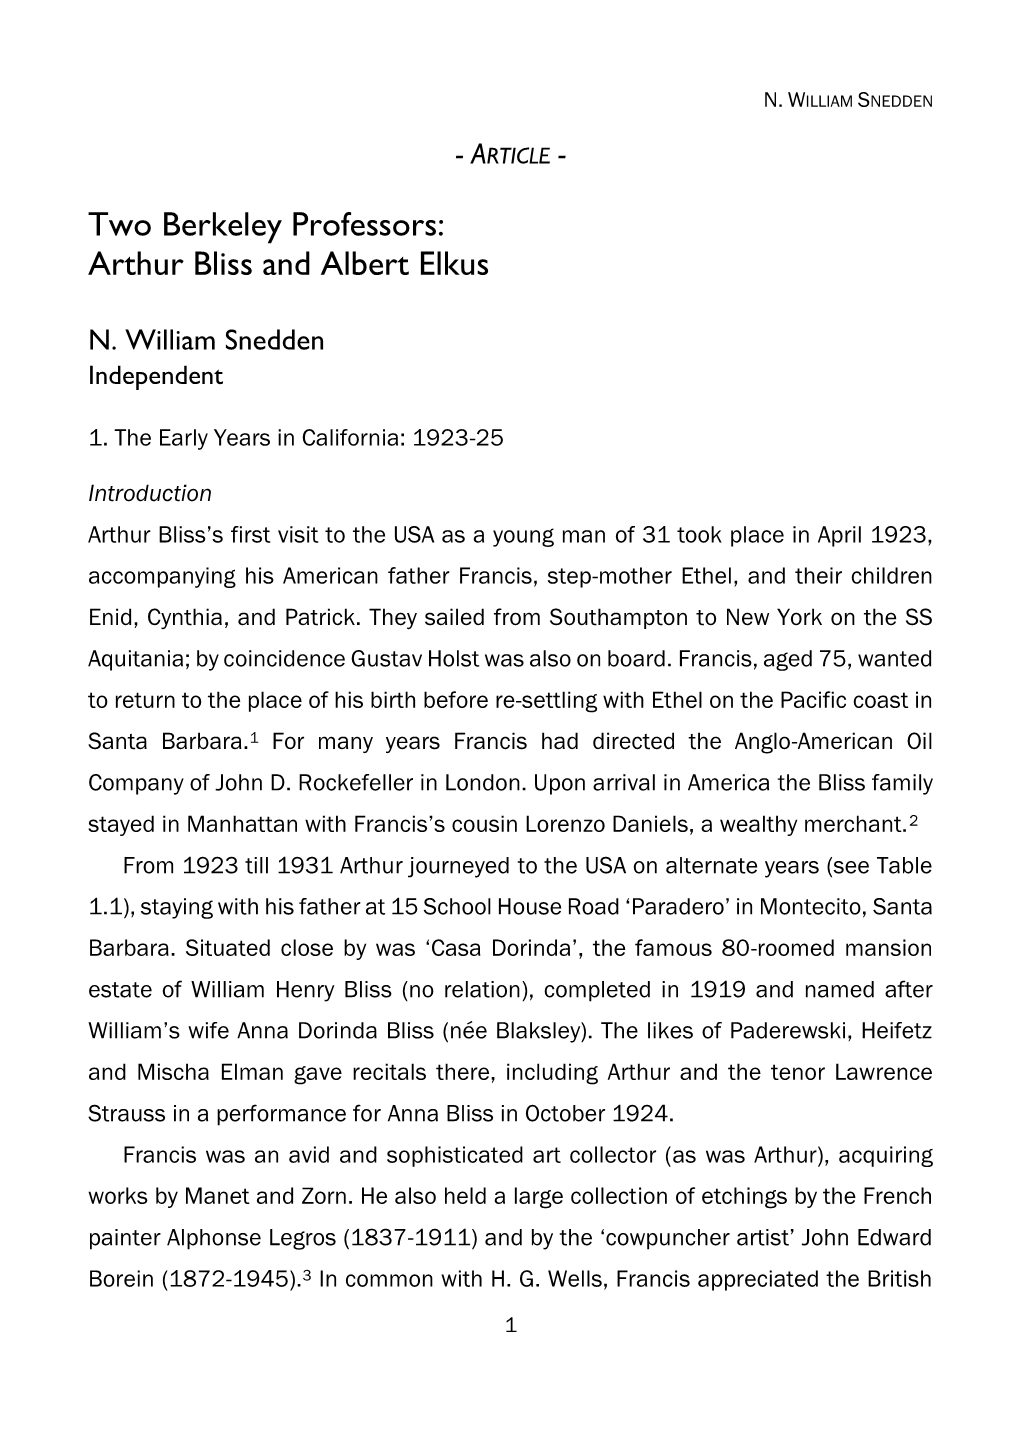 Two Berkeley Professors: Arthur Bliss and Albert Elkus